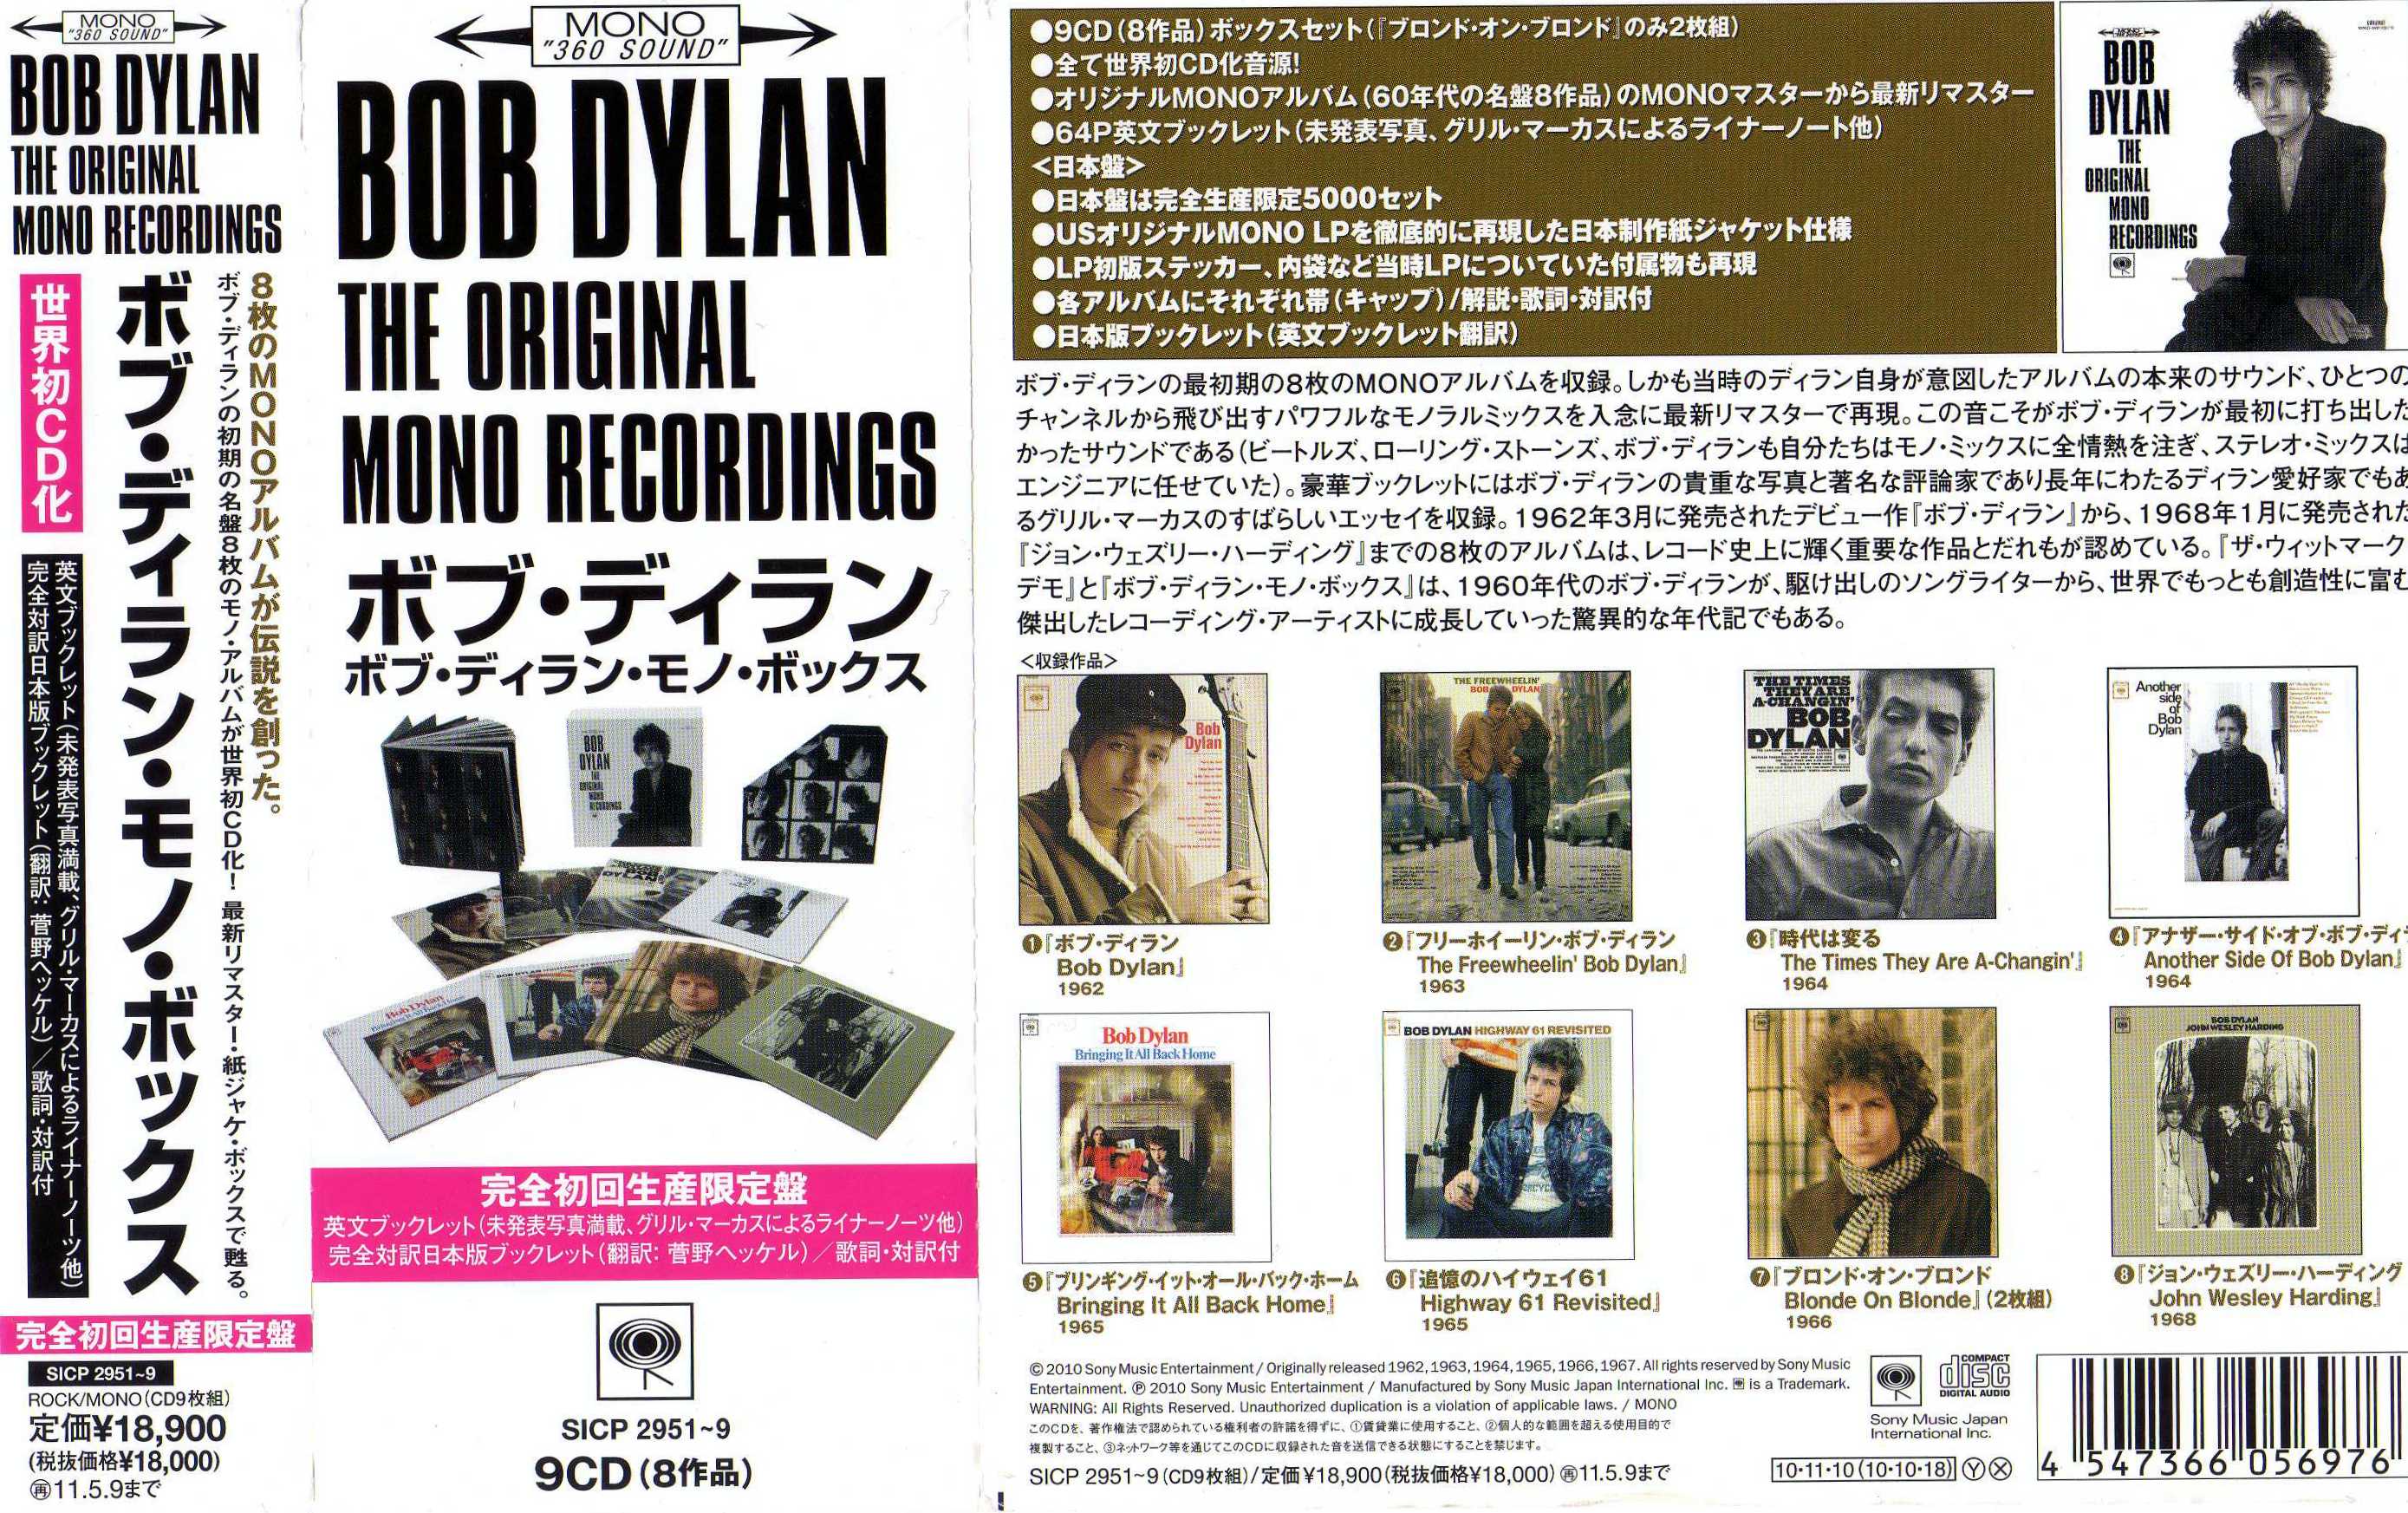 Bob Dylan: Original Mono Recordings ボックス レコード 8作品9枚組